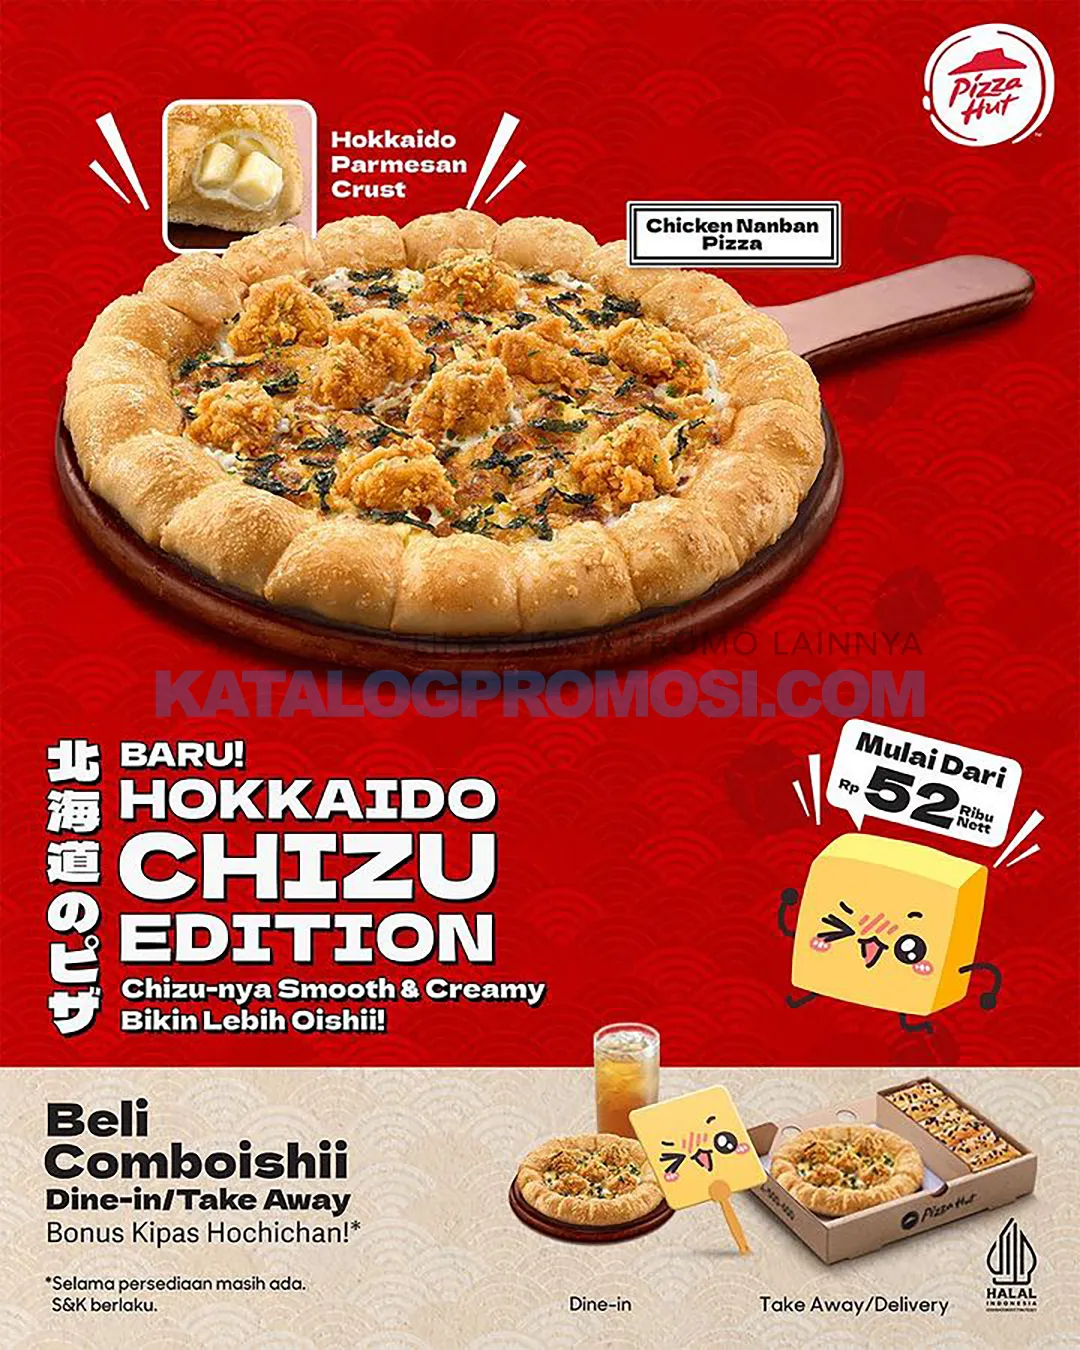 BARU! PIZZA HOKKAIDO Chizhu Edition dari PIZZA HUT